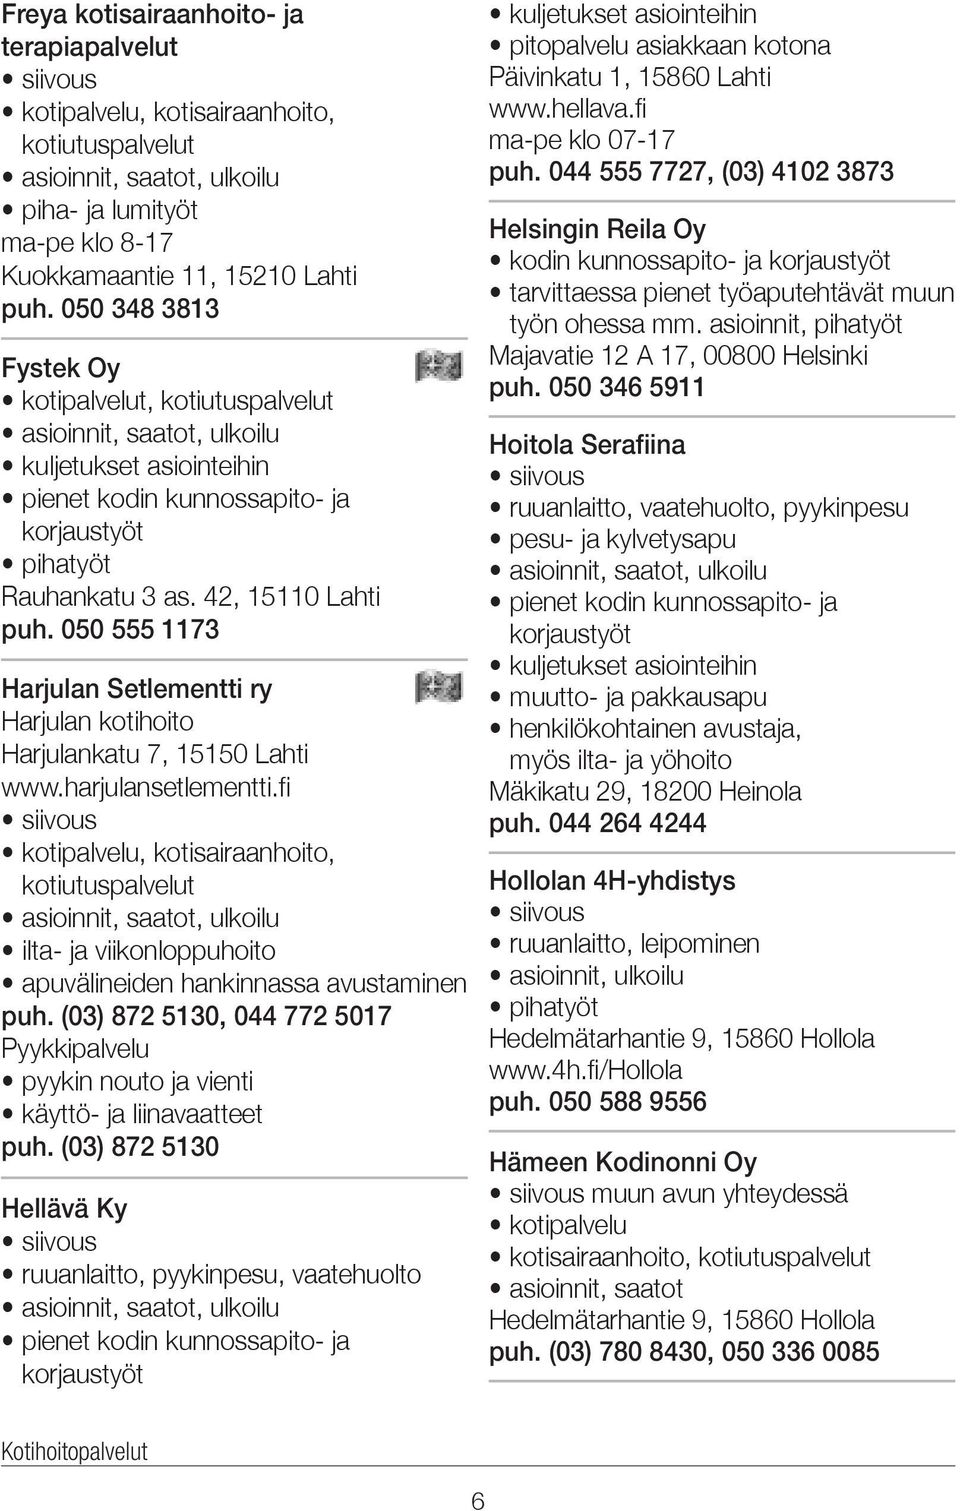 050 555 1173 Harjulan Setlementti ry Harjulan kotihoito Harjulankatu 7, 15150 Lahti www.harjulansetlementti.